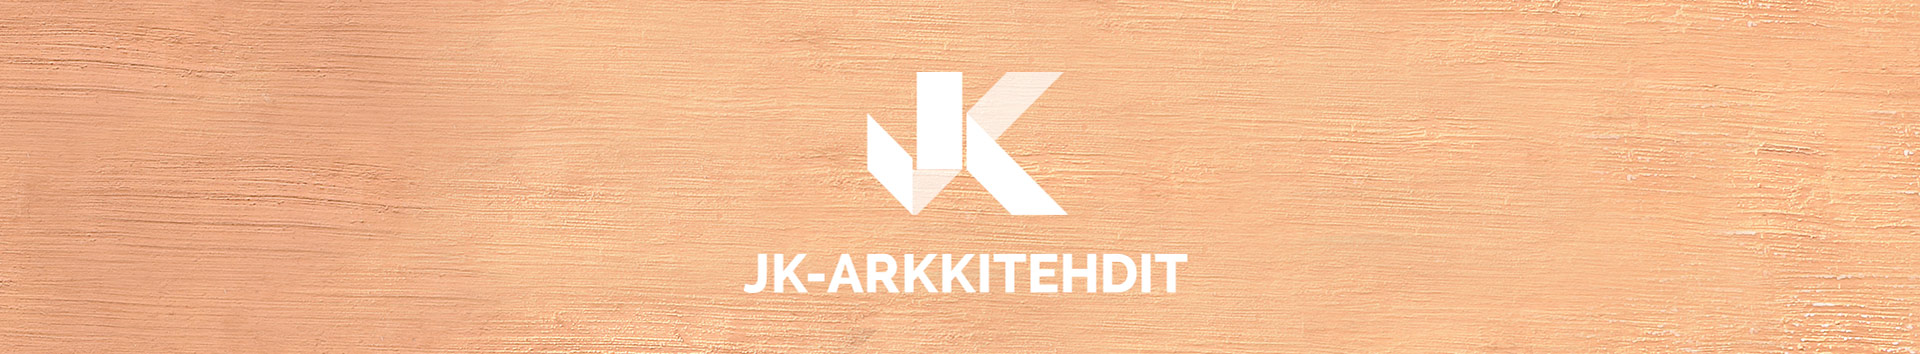 JK-arkkitehdit logo